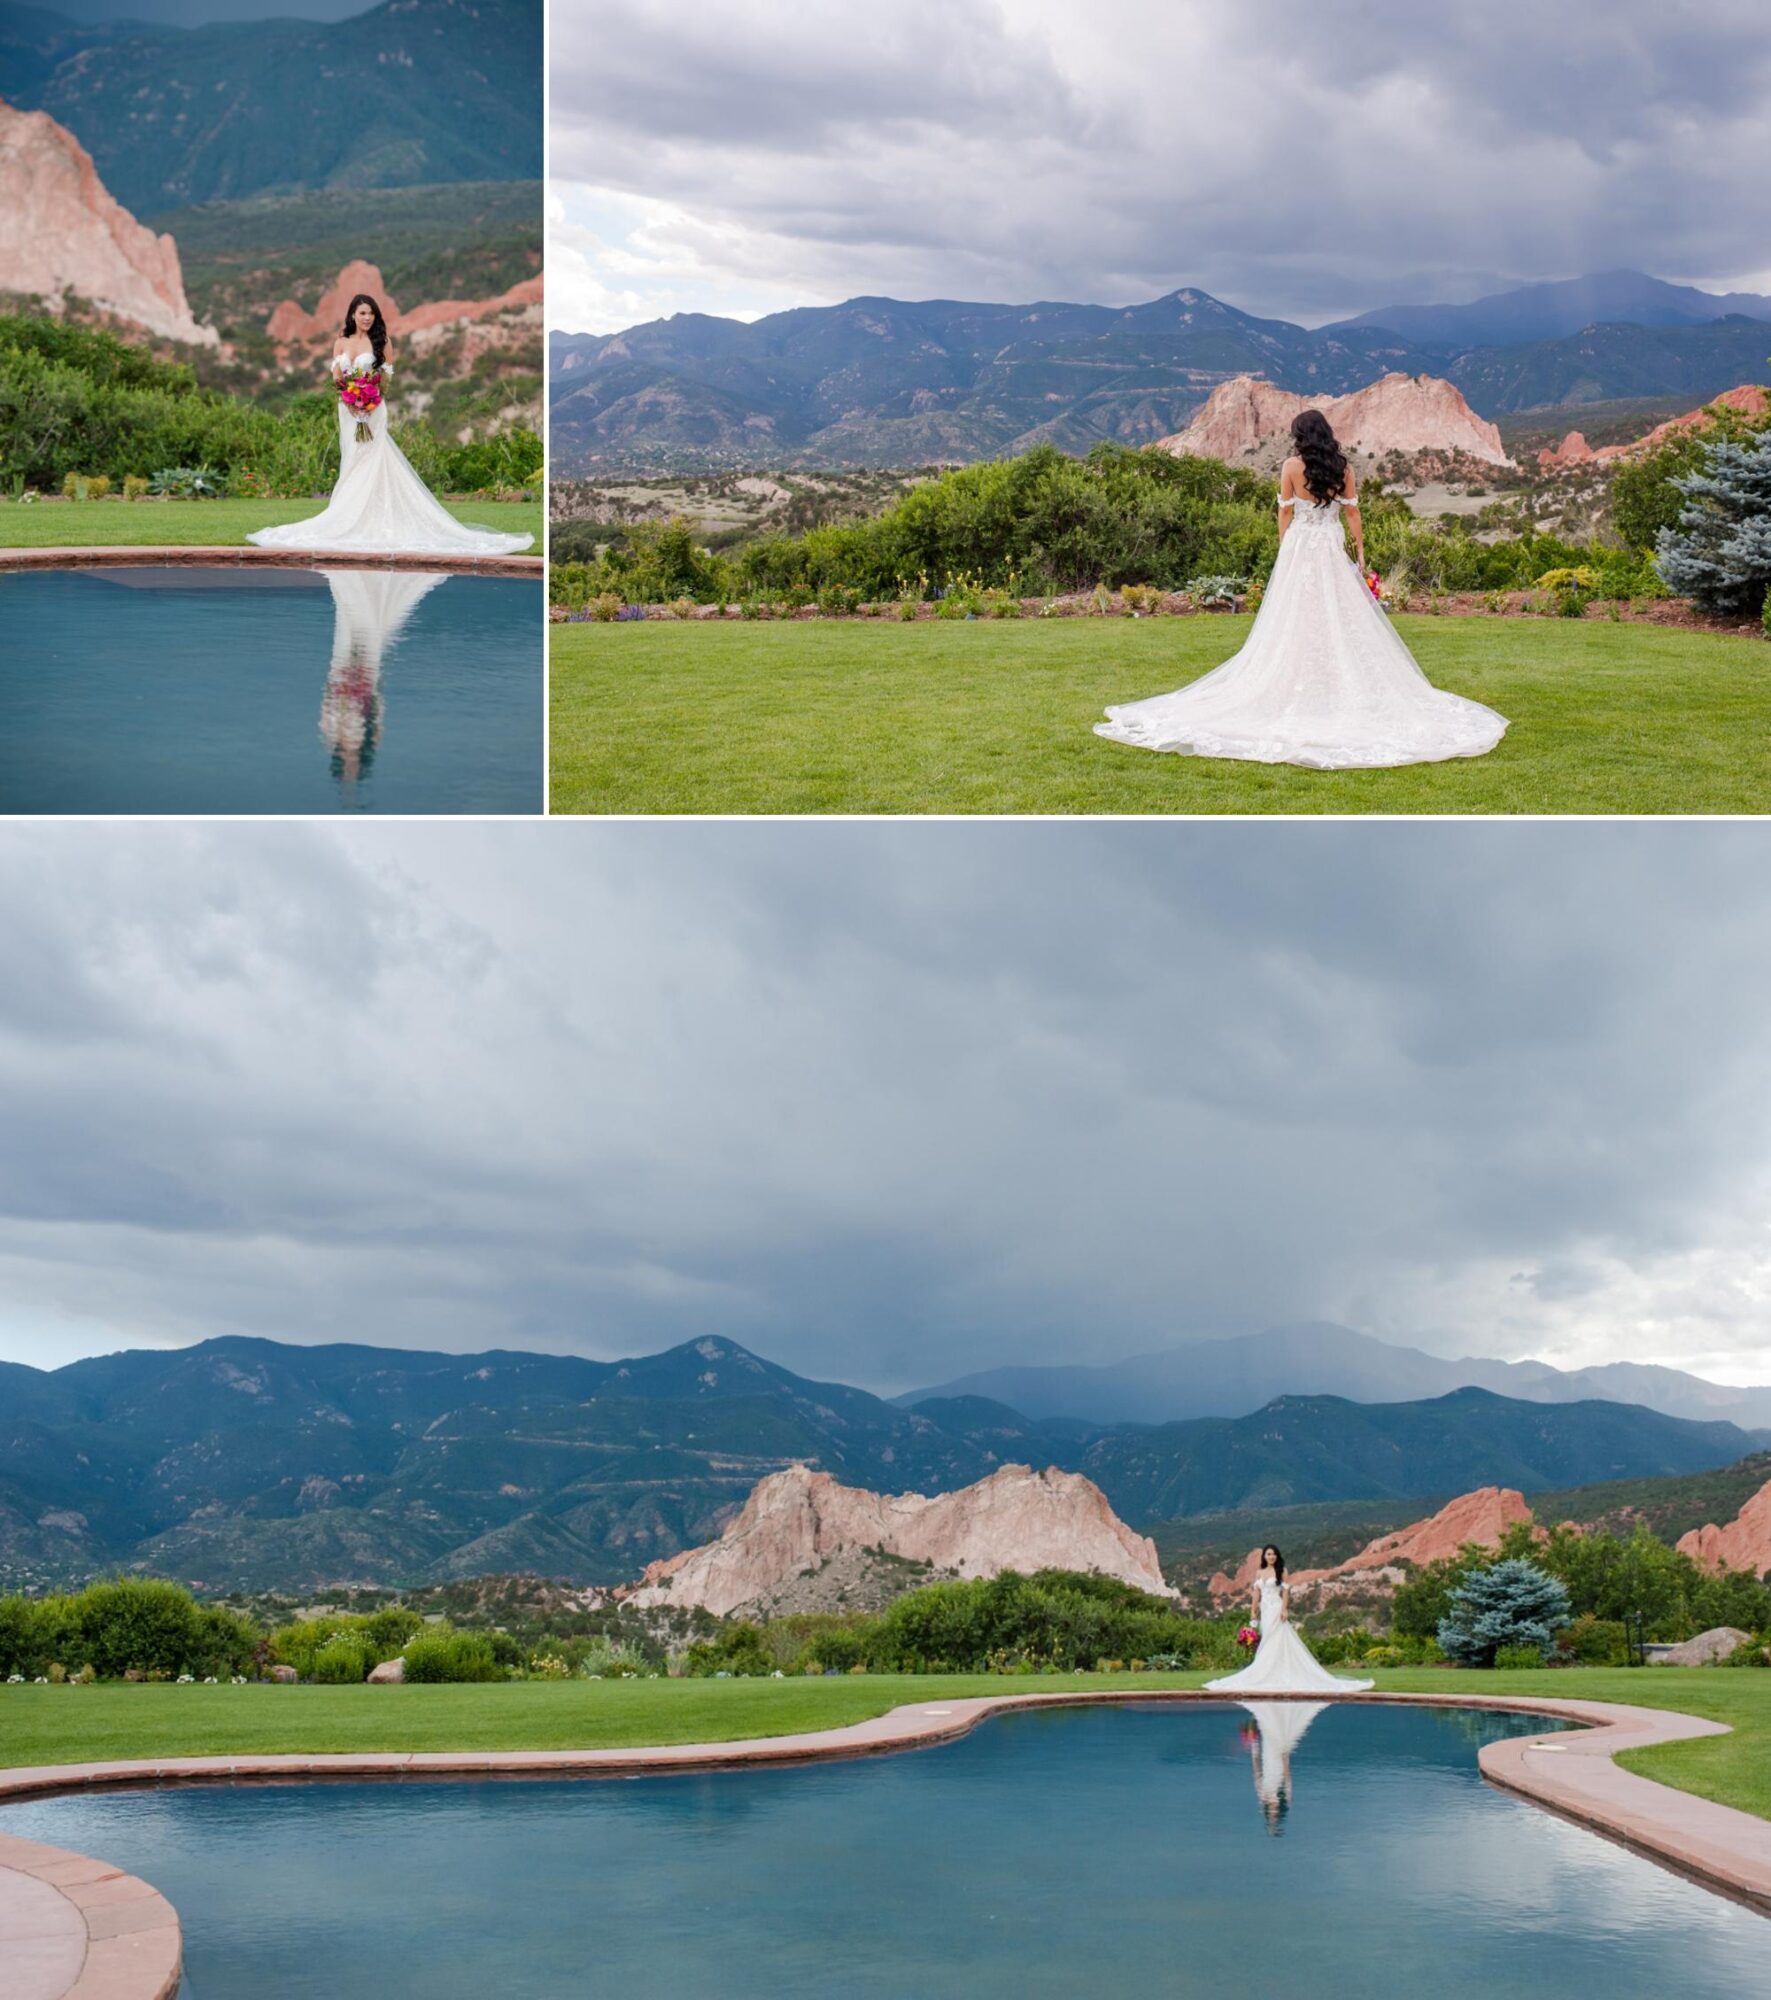 Colorado Springs Summer Garden of the Gods Resort wedding